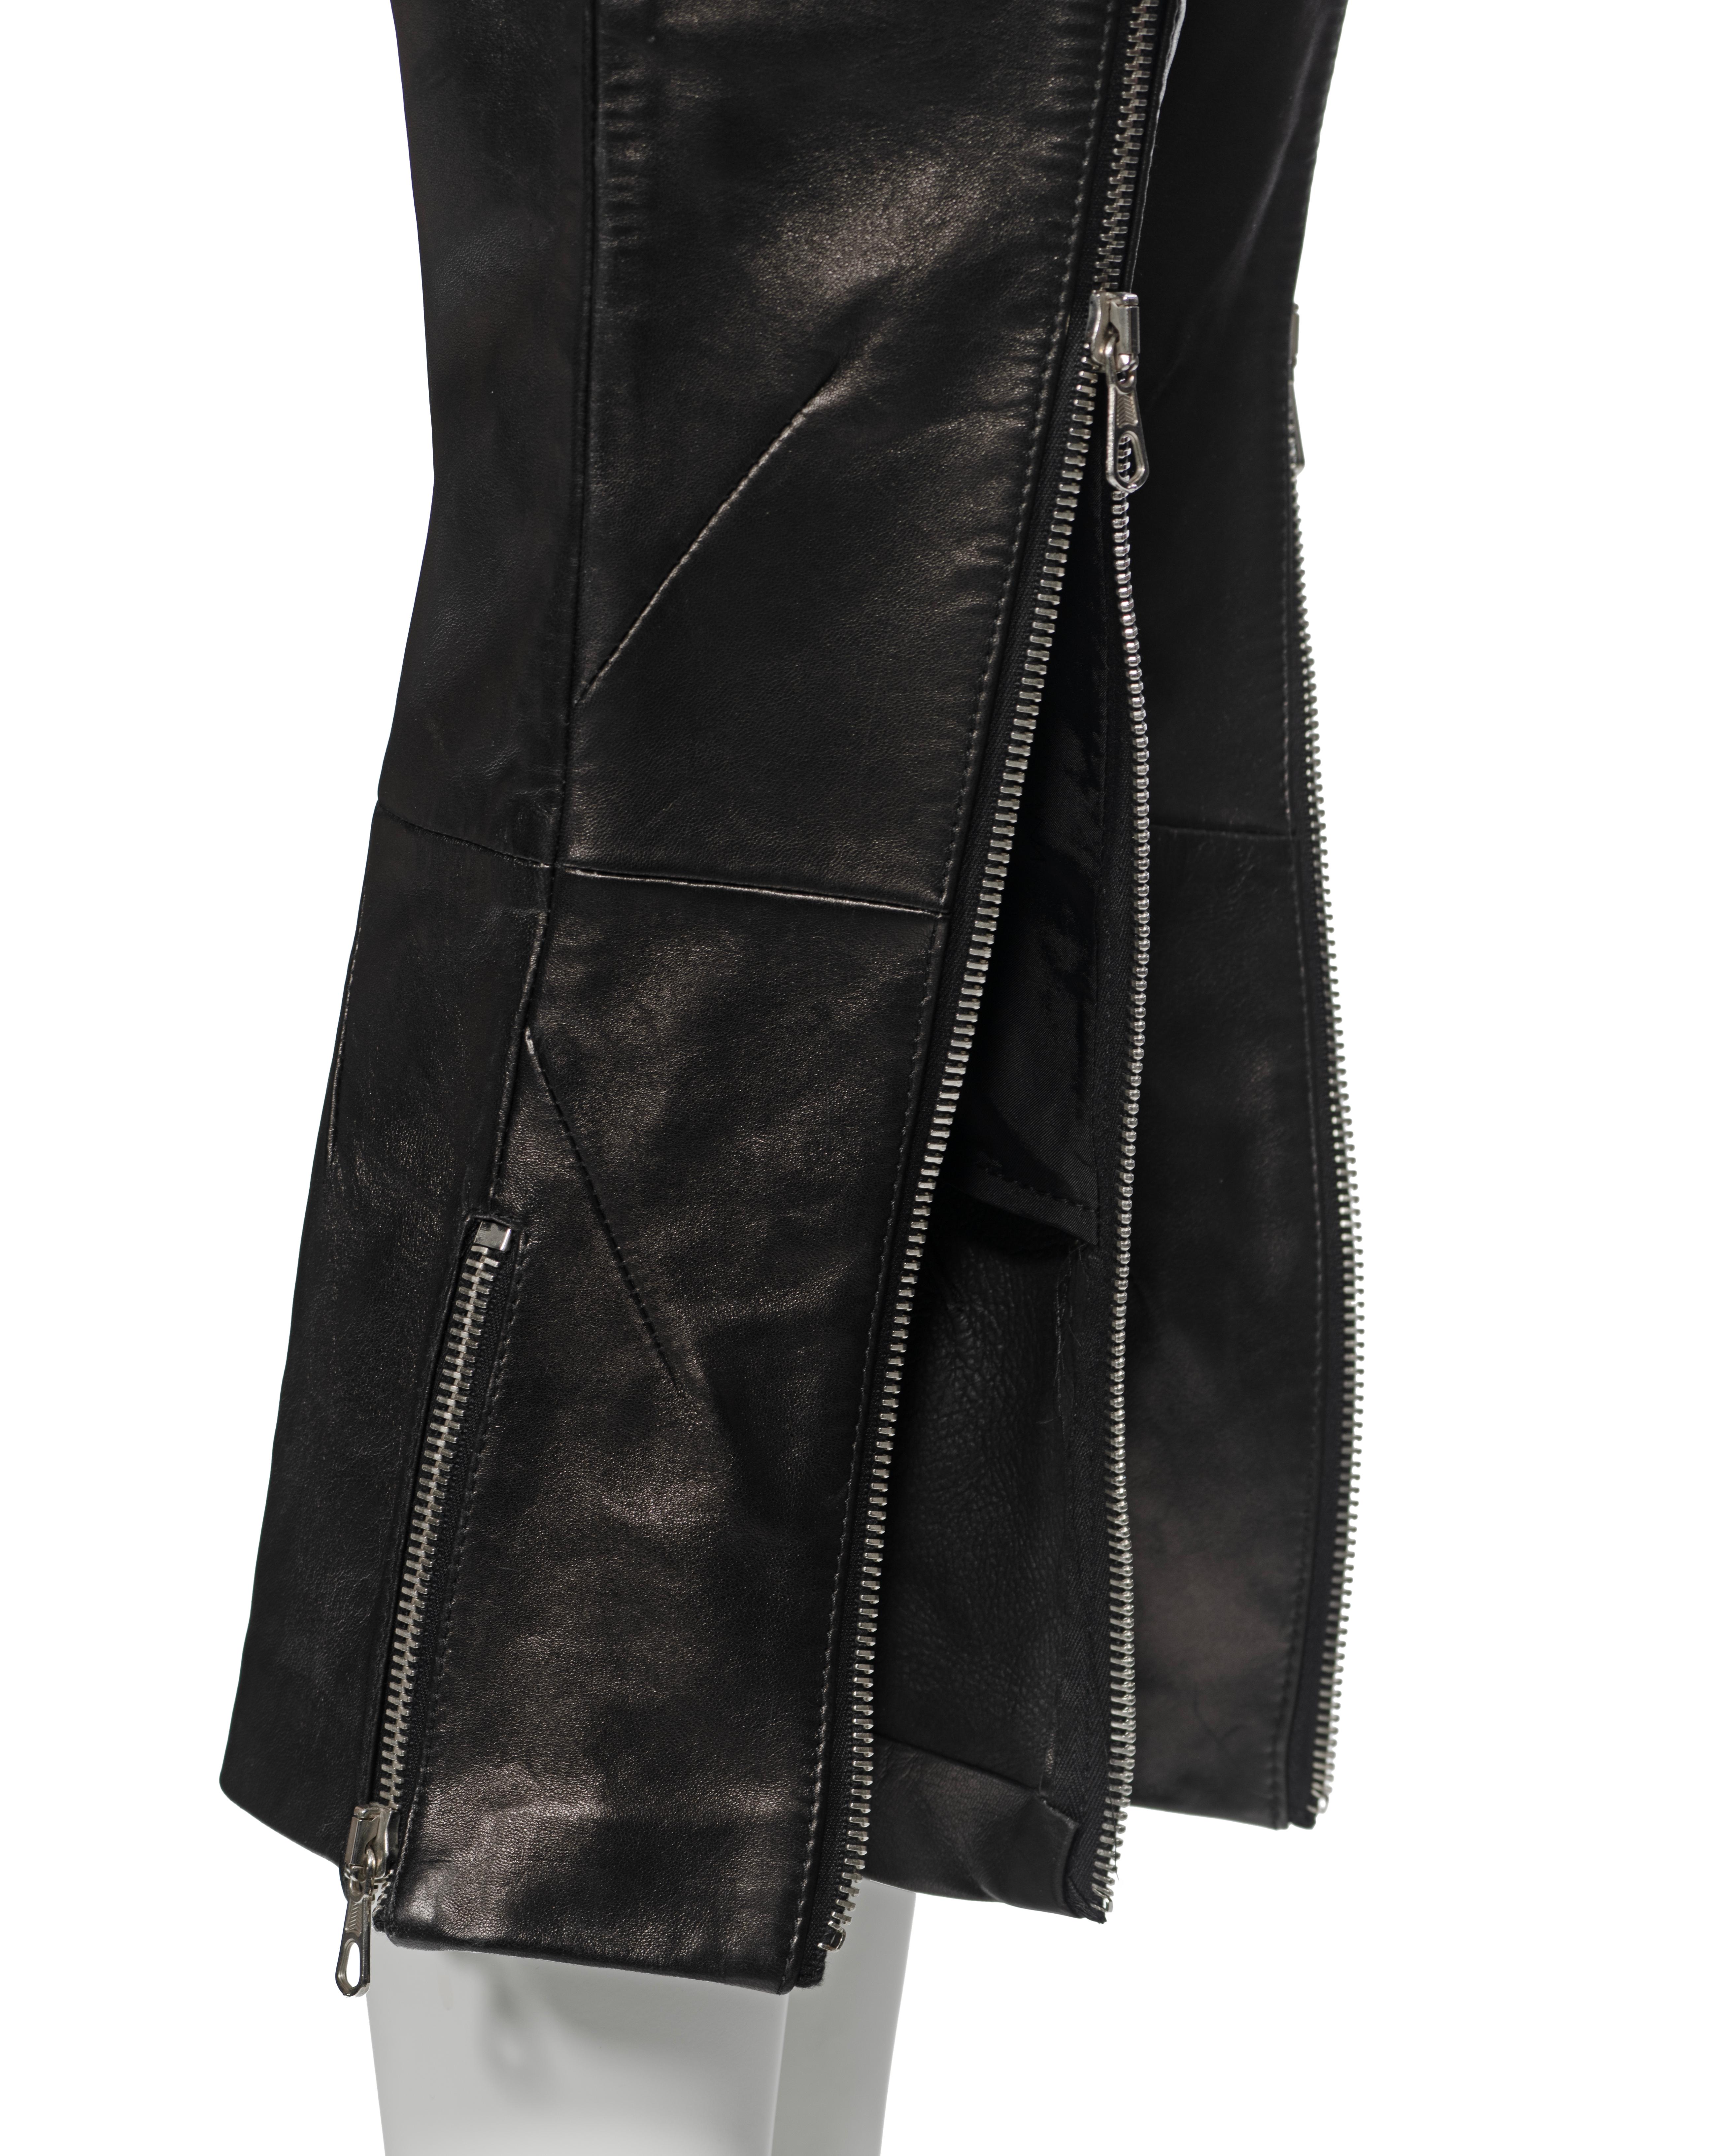 Dolce & Gabbana Black Leather Capri Pants, ss 2000 For Sale 4